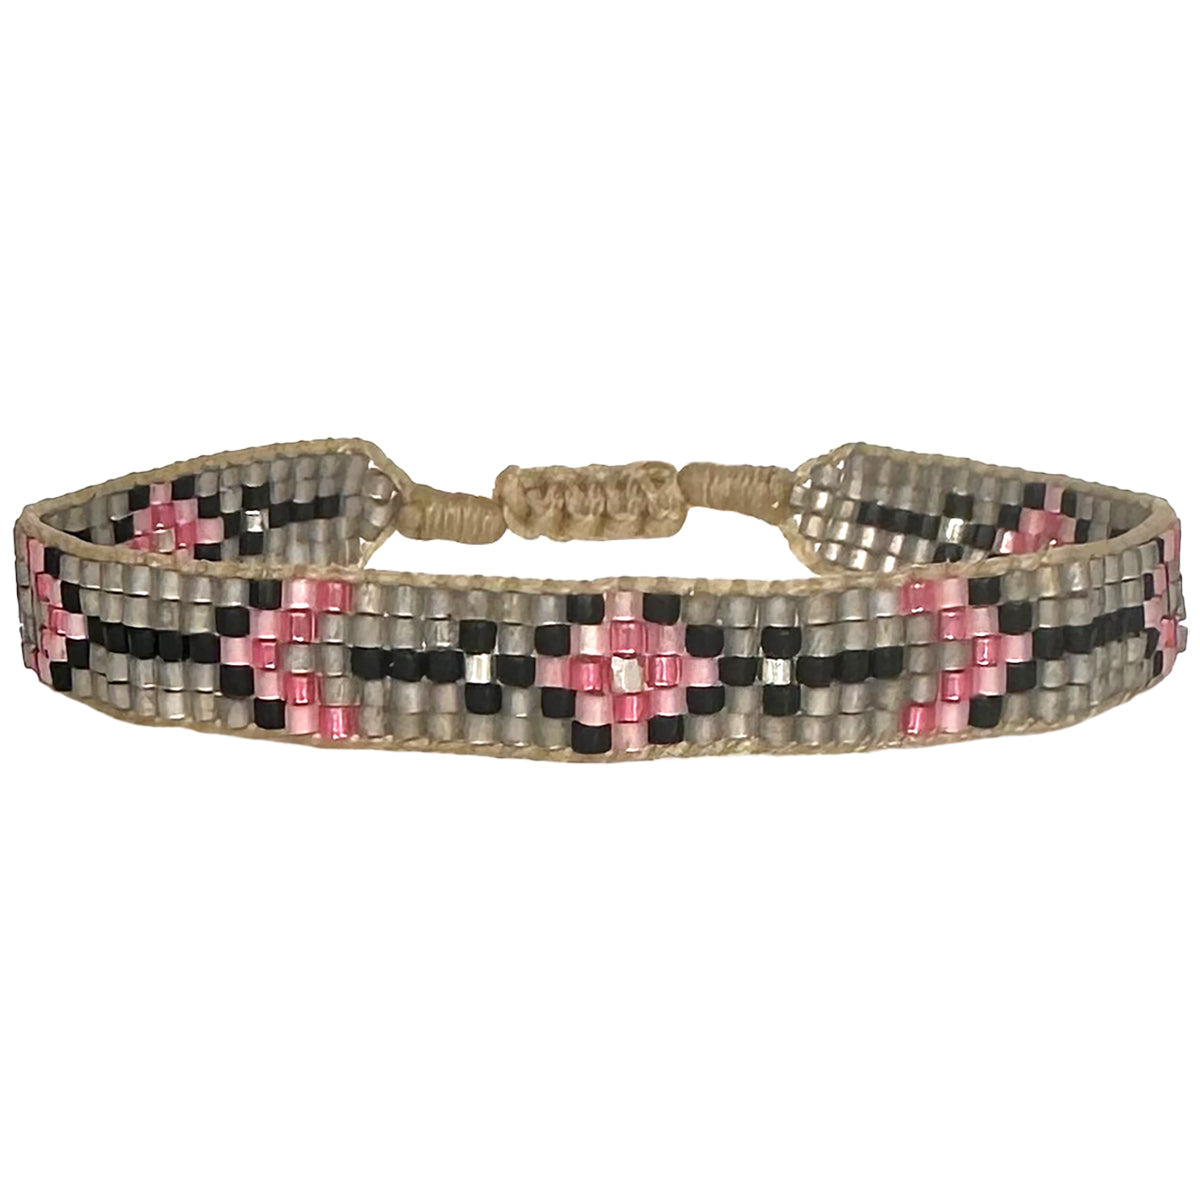 Details:      Women bracelet     Handemade bracelet      Japanese glass beads     Adjustable bracelet     Width 9mm     Can be worn in the water